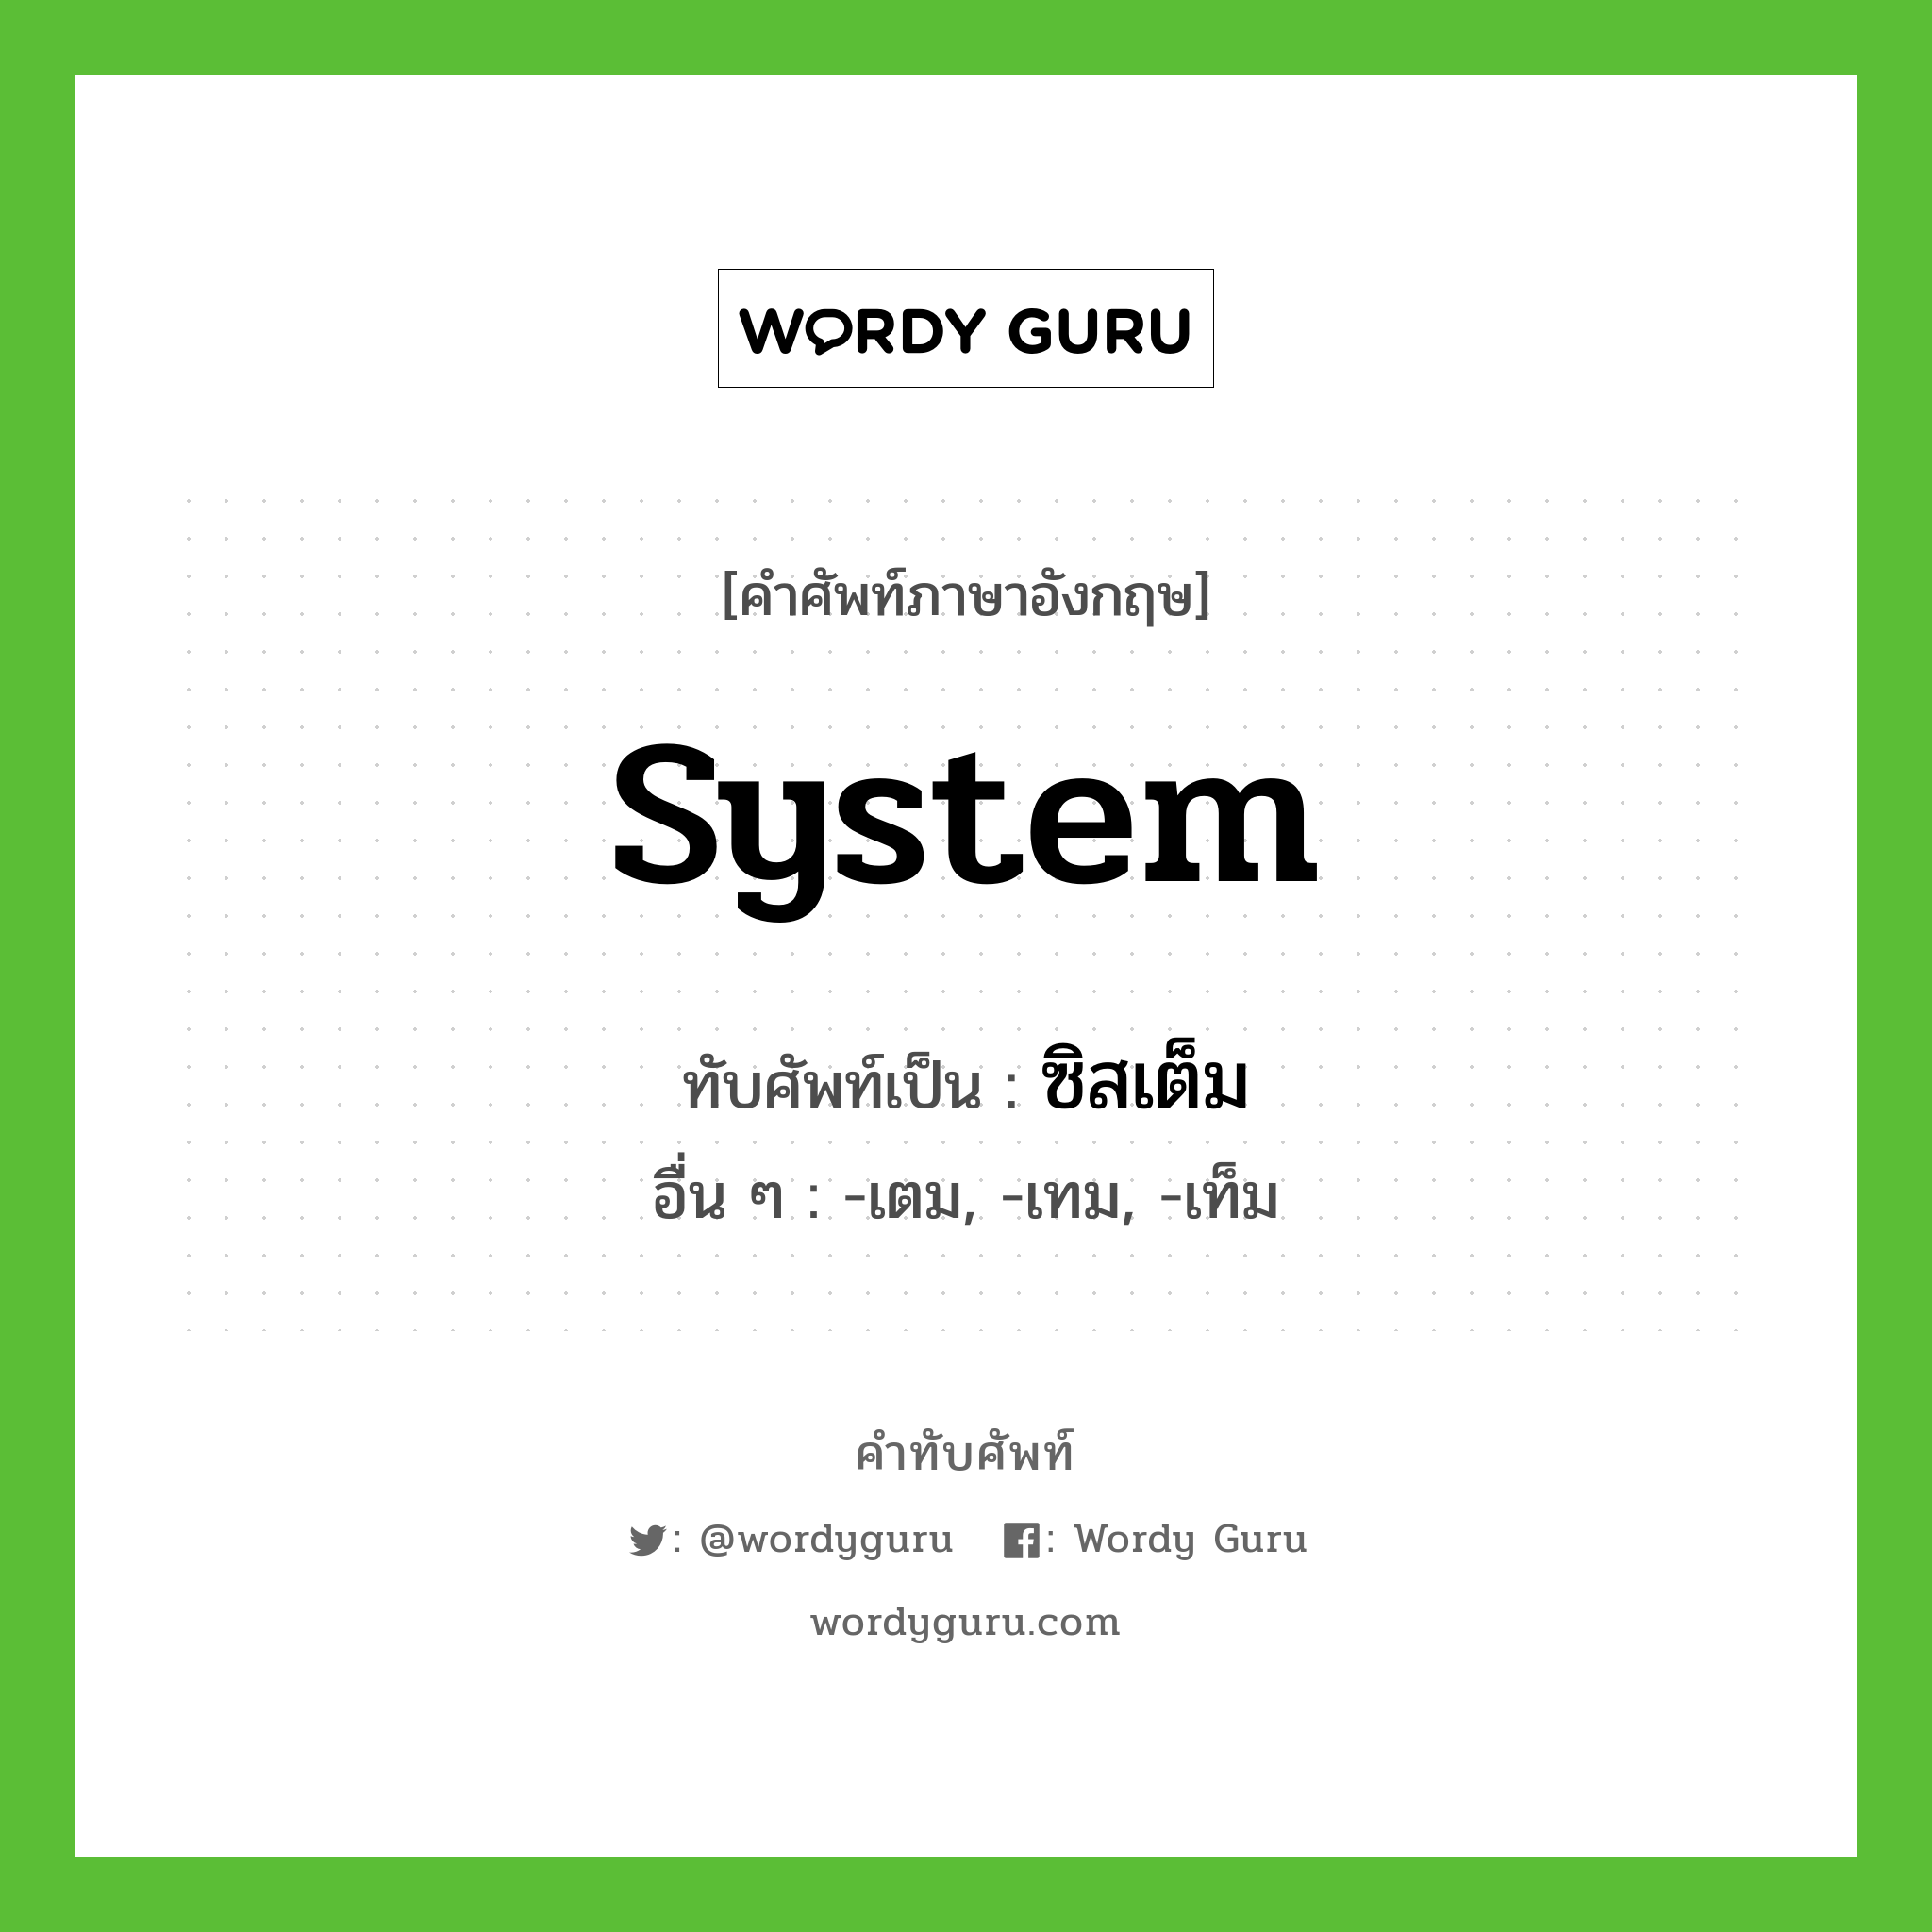 system เขียนเป็นคำไทยว่าอะไร?, คำศัพท์ภาษาอังกฤษ system ทับศัพท์เป็น ซิสเต็ม อื่น ๆ -เตม, -เทม, -เท็ม